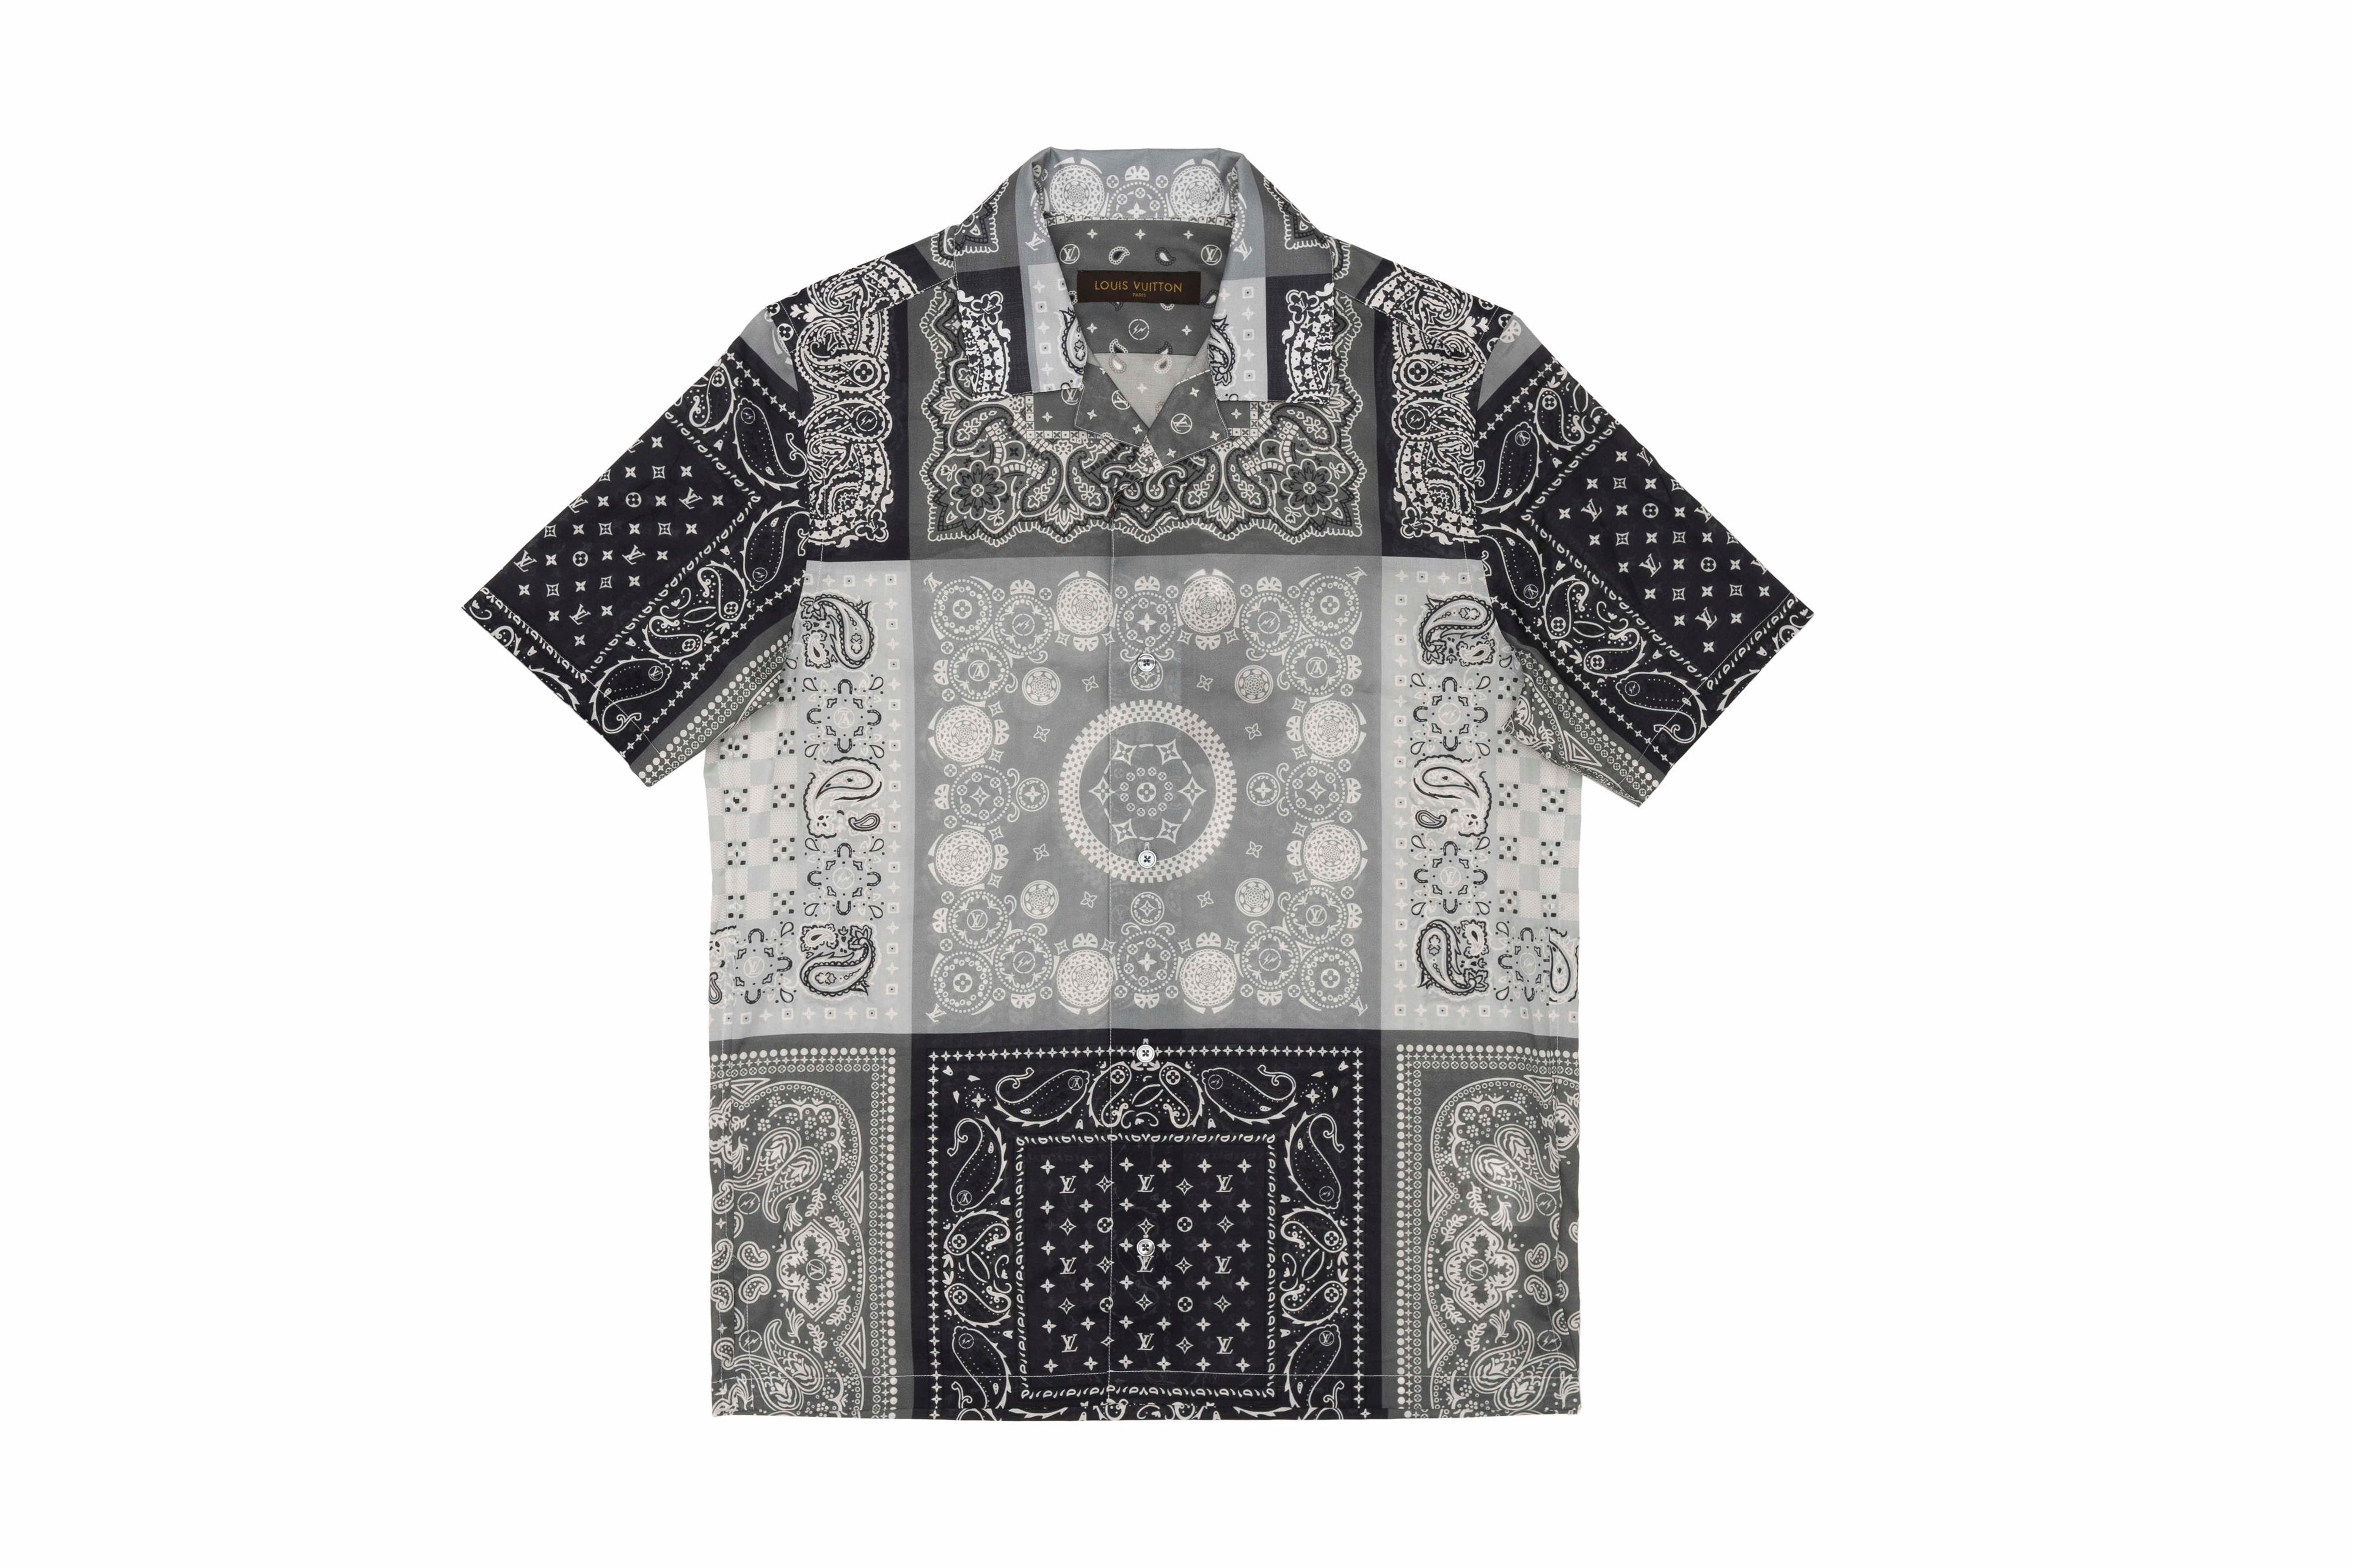 黑白回歸 - LOUIS VUITTON 夏威夷襯衫復刻 並於 DOVER STREET MARKET GINZA 限定販售